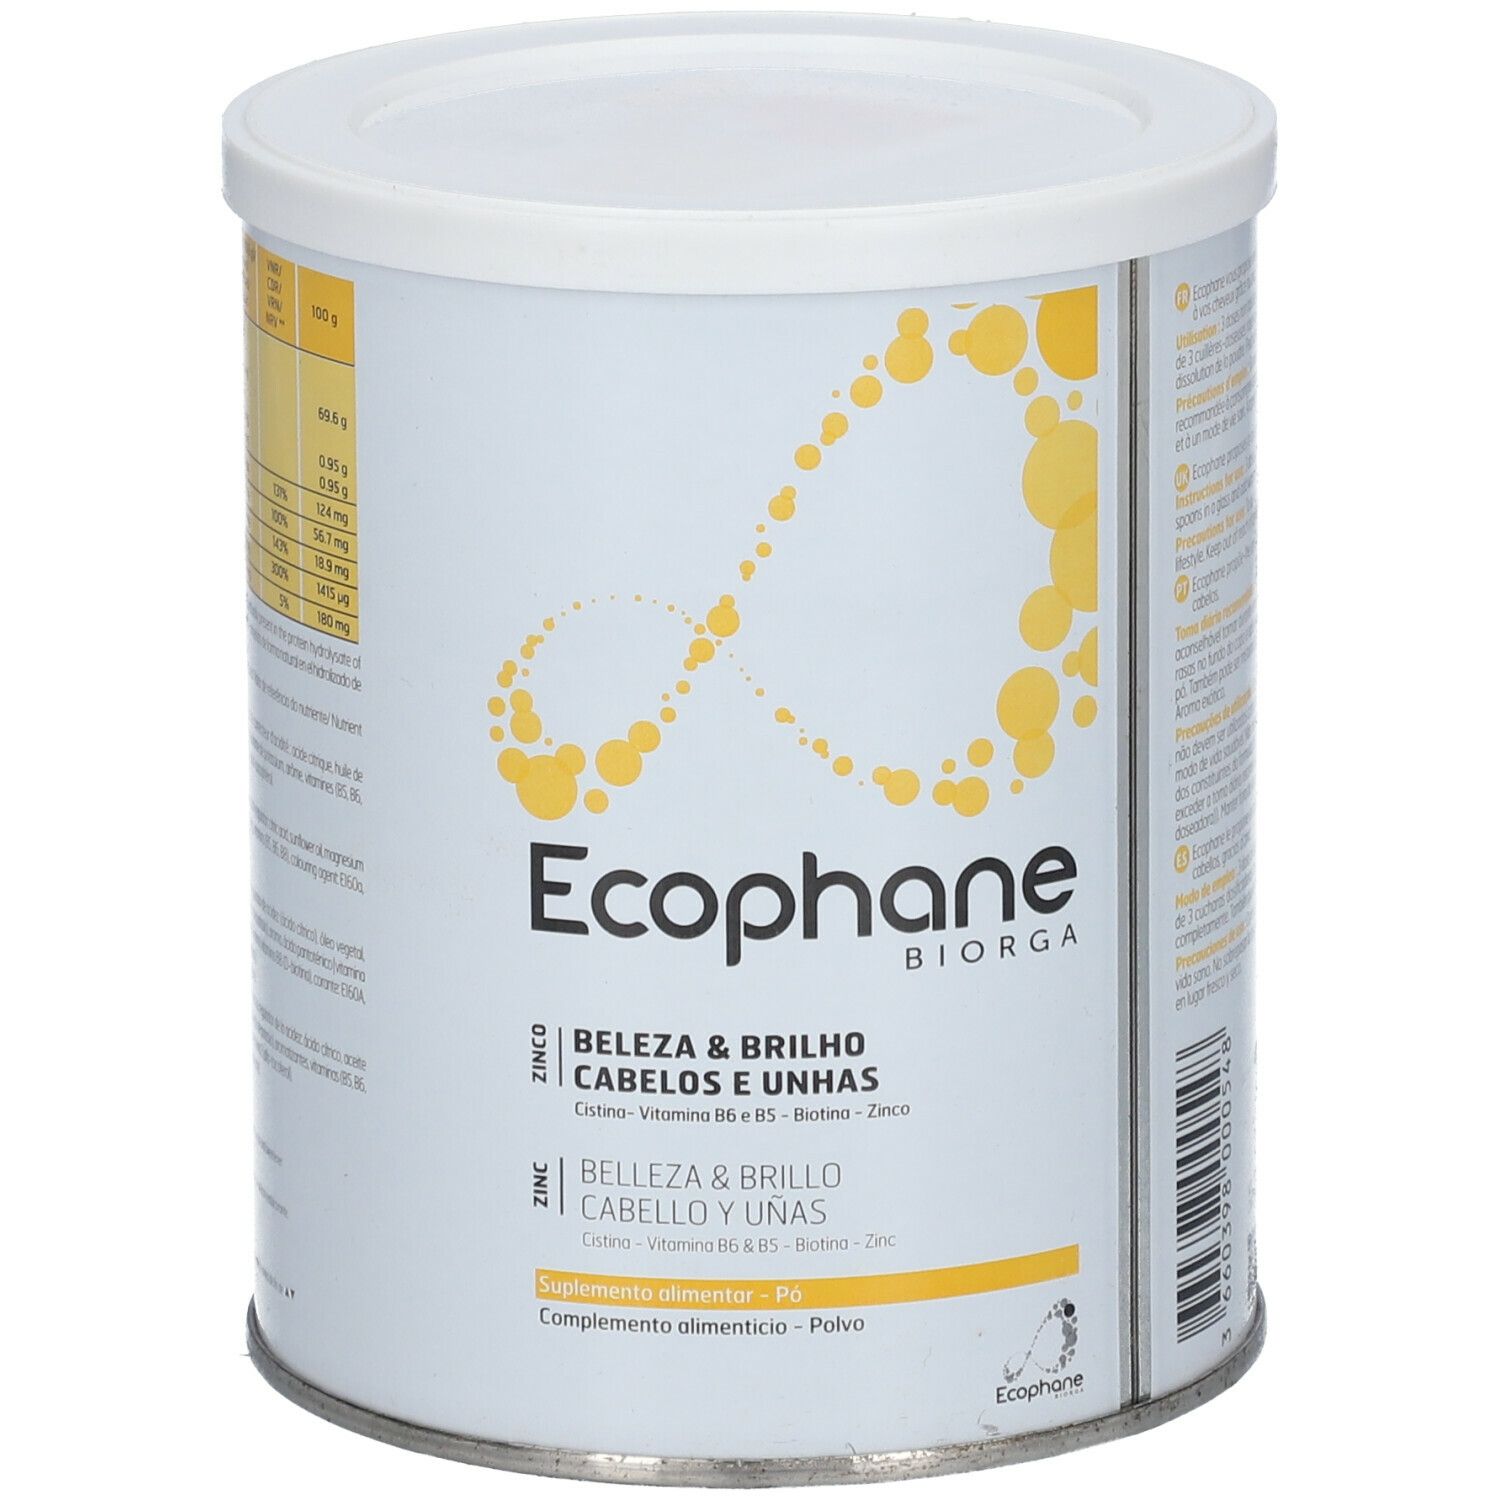 Ecophane Biorga